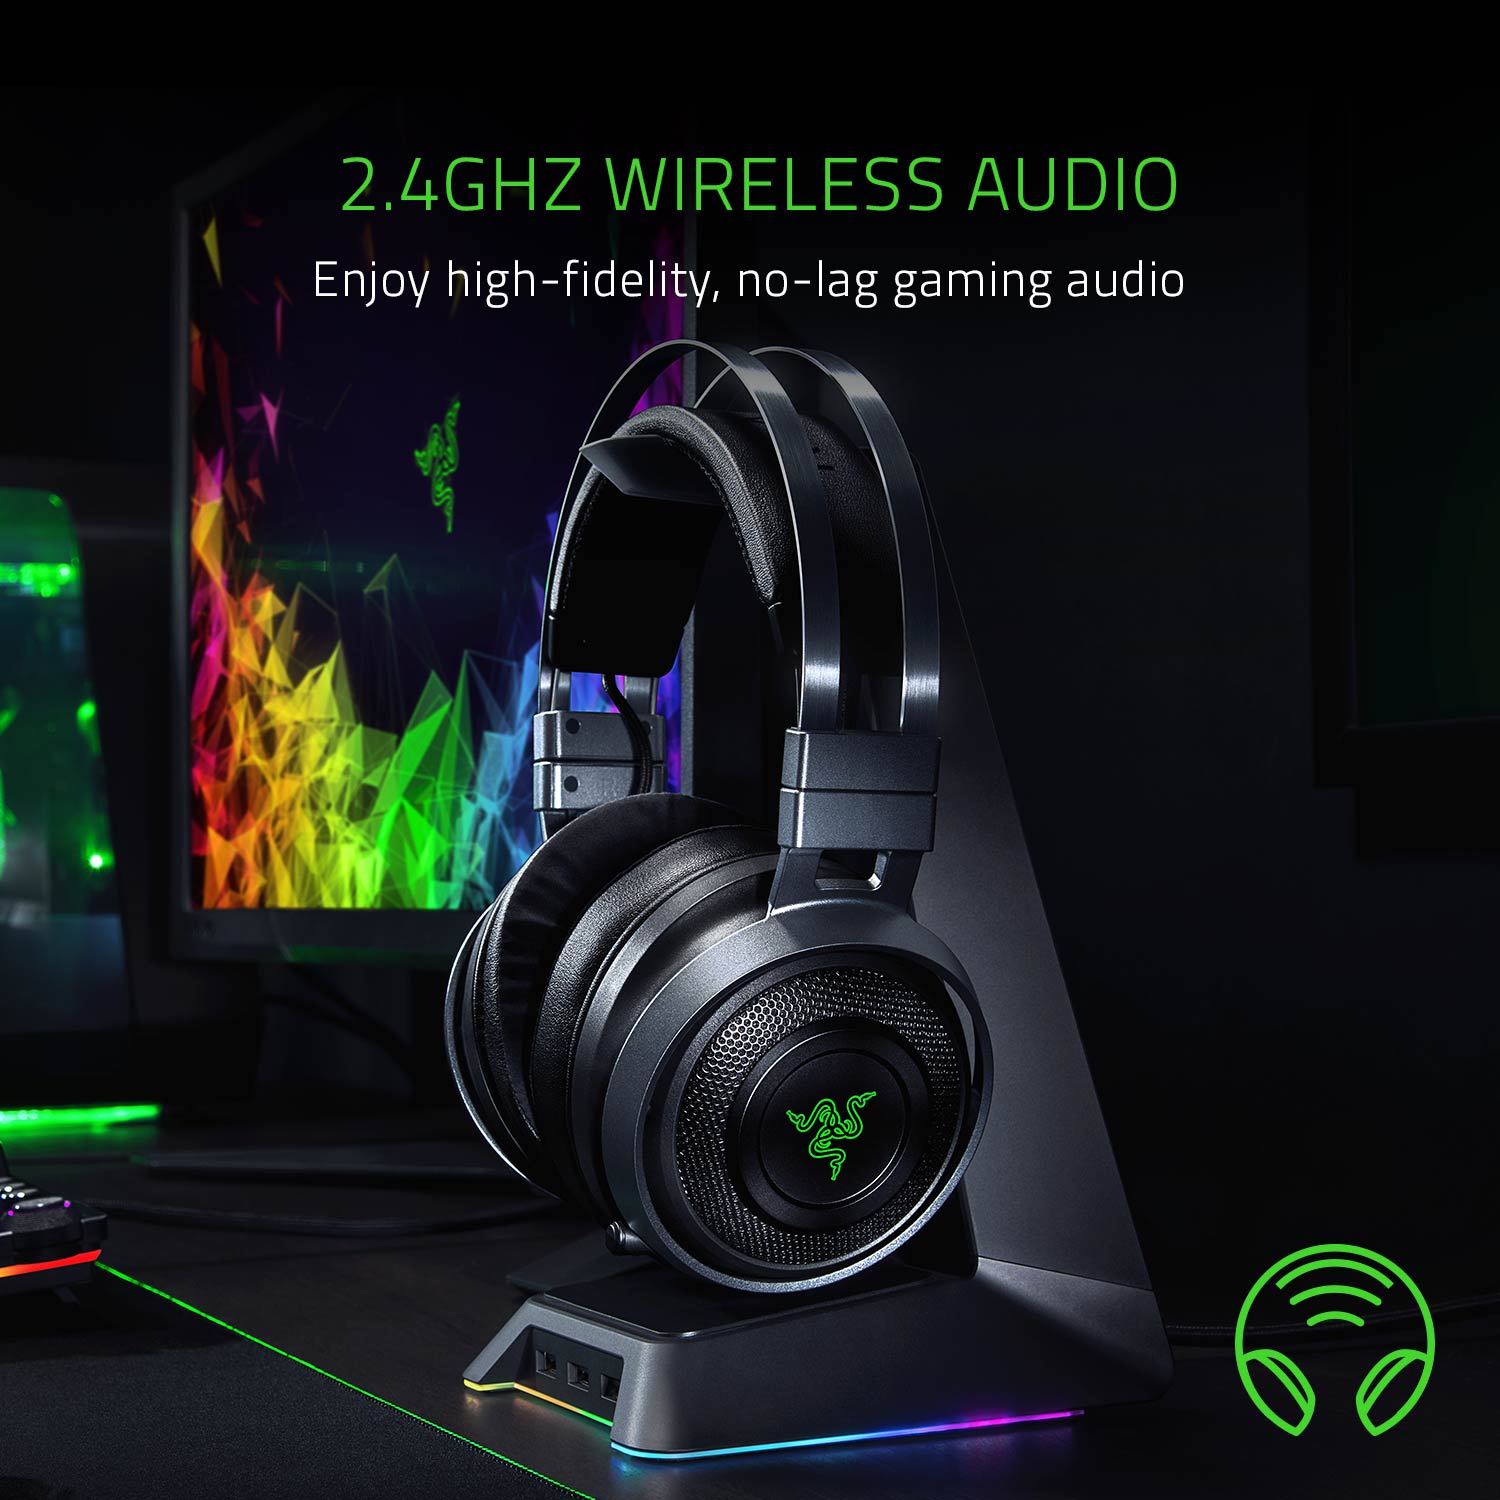 Razer Nari Ultimate Wireless 7.1 Surround Sound Gaming Headset: THX Audio & Haptic Feedback - Auto-Adjust Headband - Chroma RGB - Retractable Mic - For PC, PS4, PS5 - Black - image 4 of 6